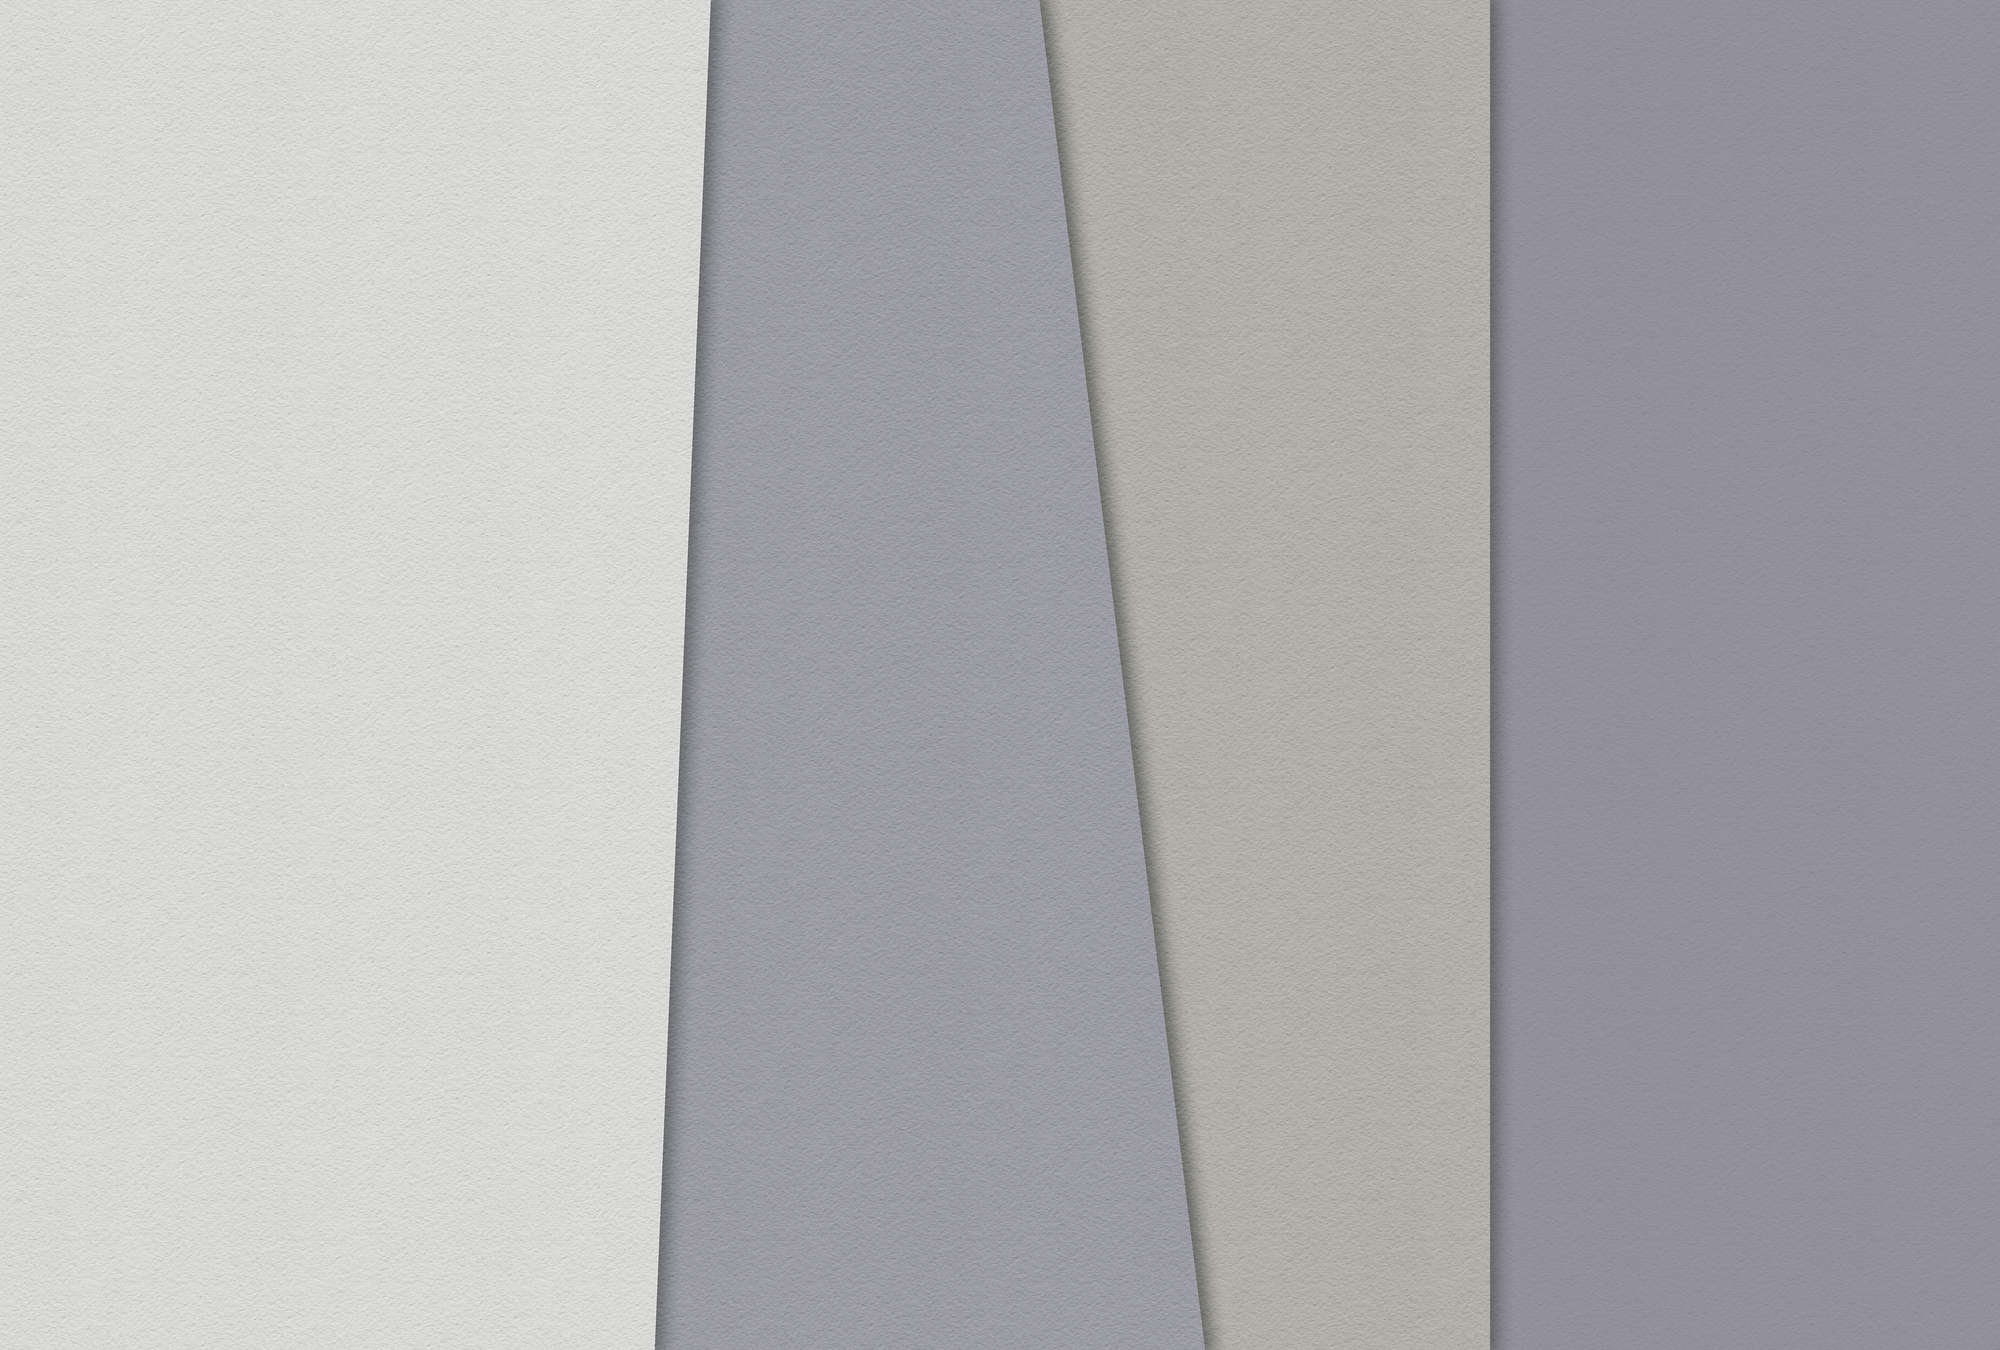             Gelaagd papier 2 - Grafisch behang, handgemaakt papier structuur minimalistisch ontwerp - Crème, Groen | Mat glad vlies
        